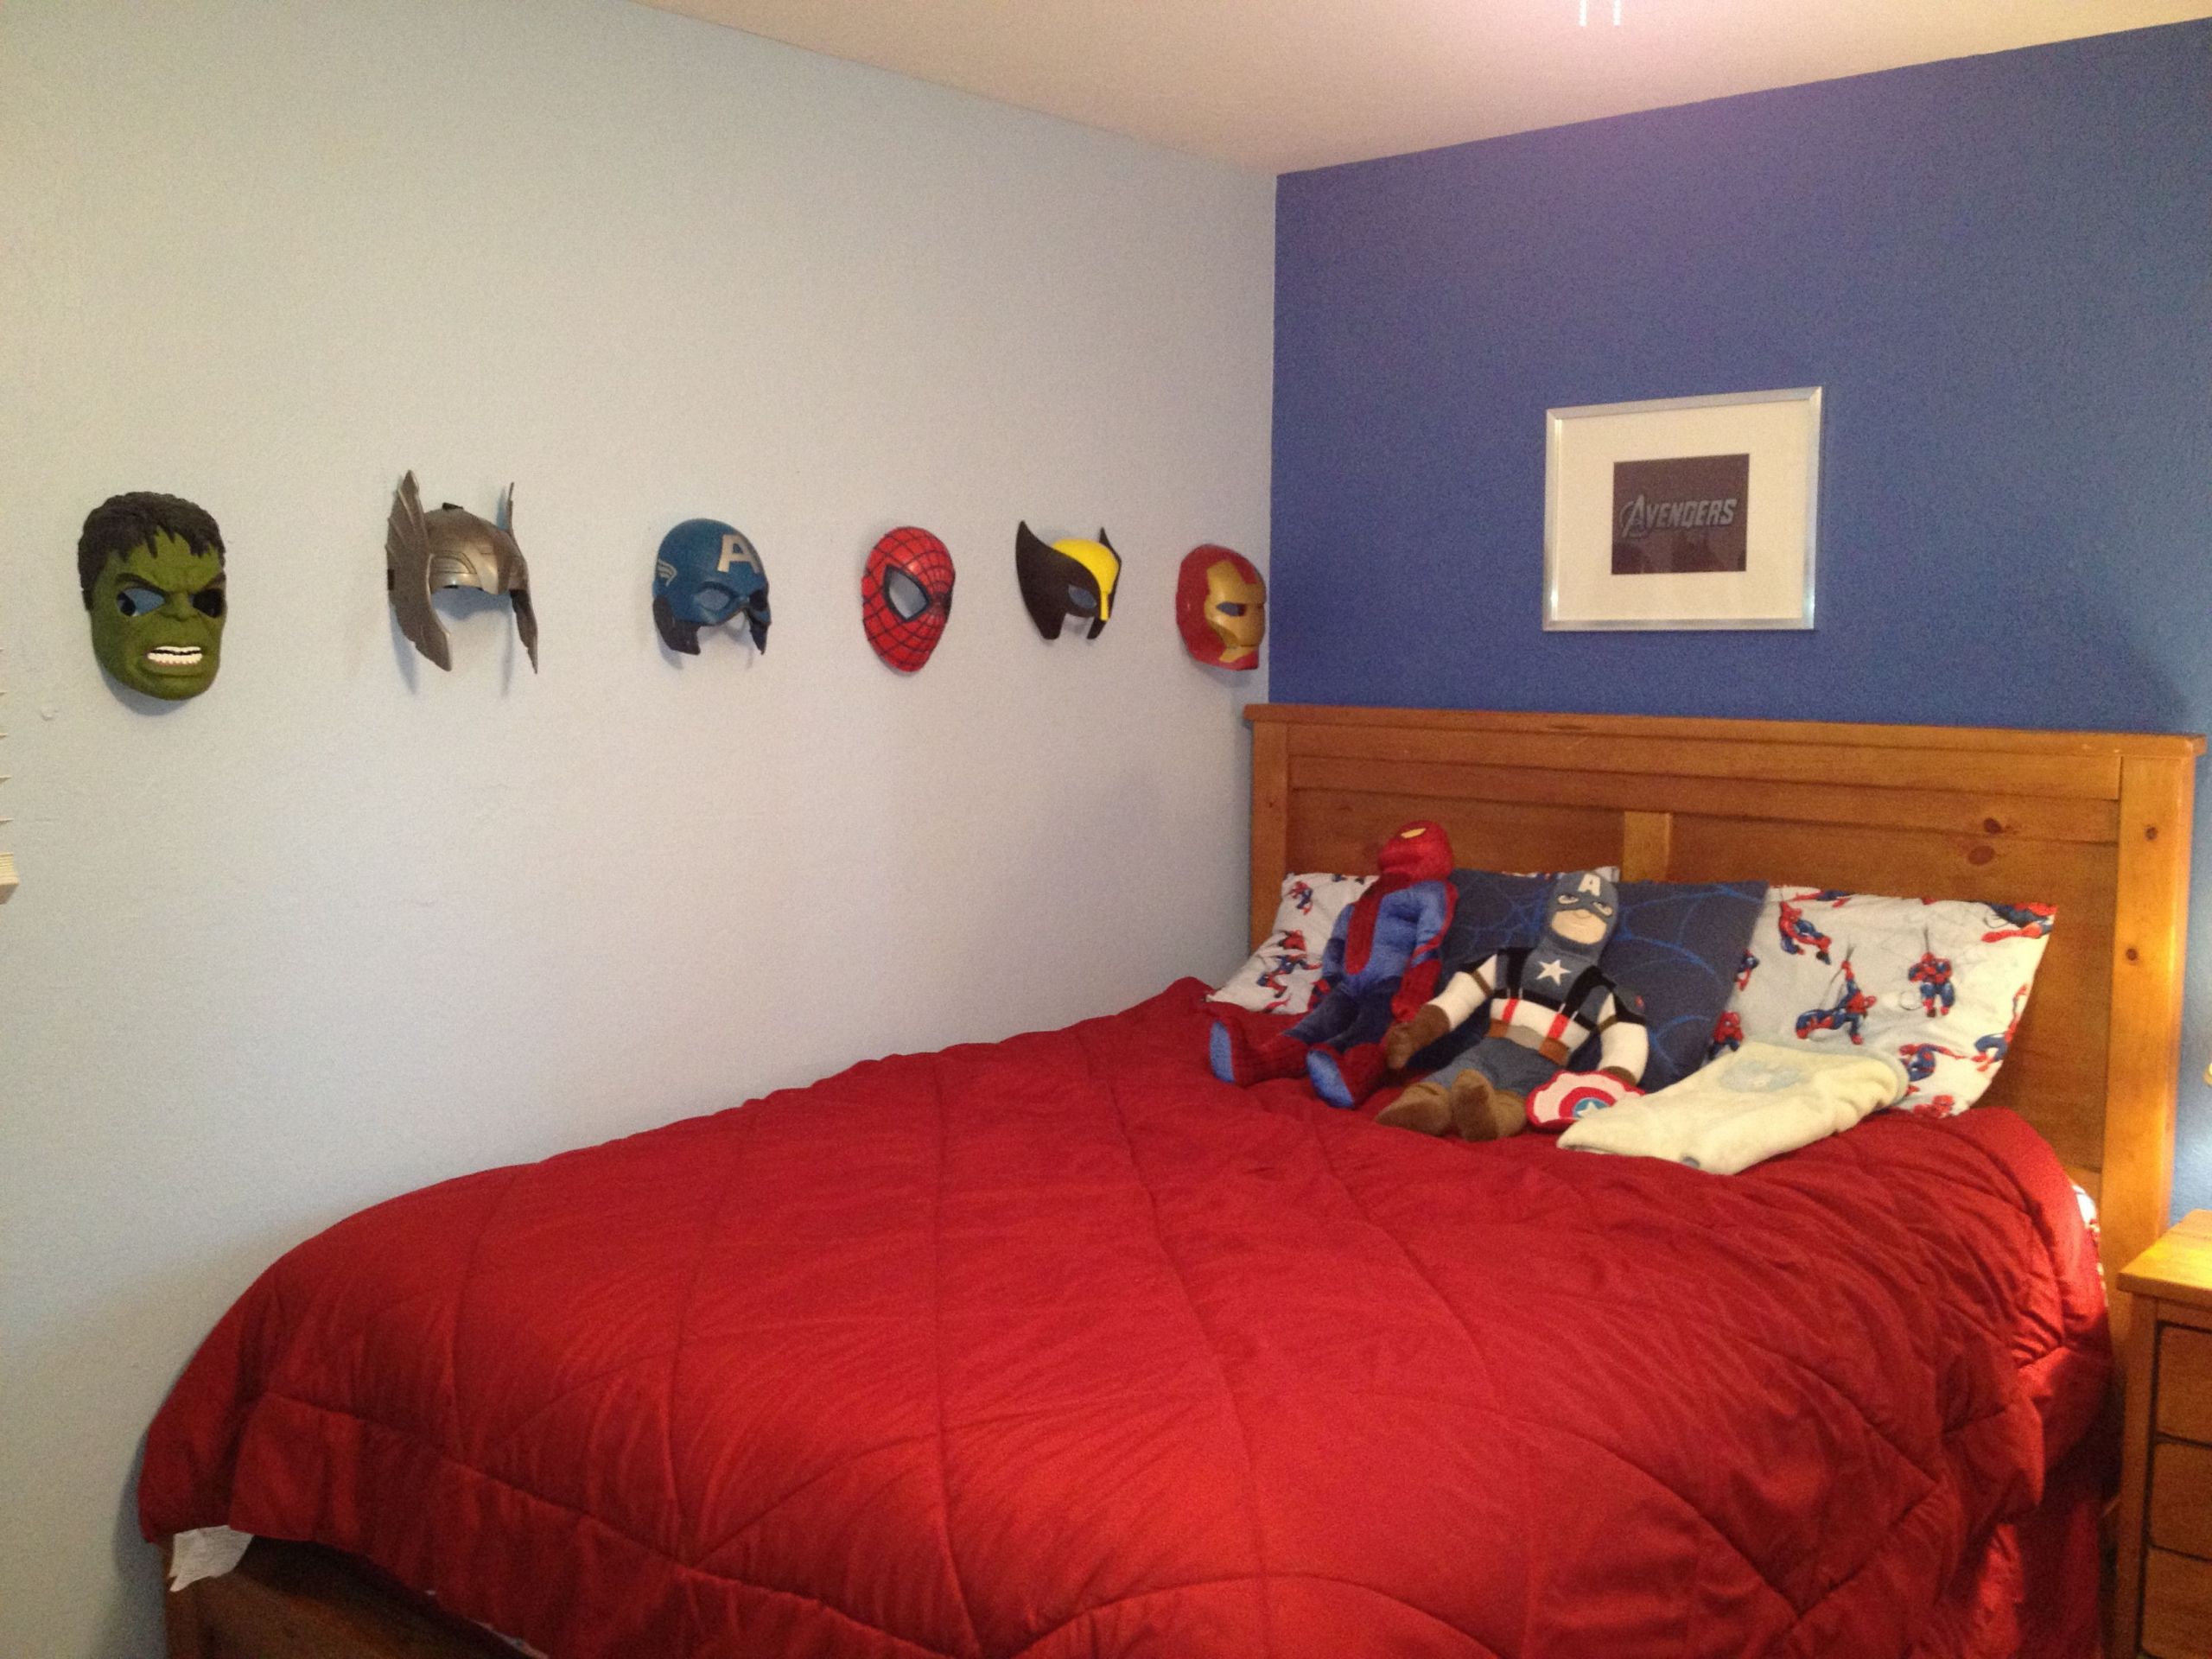 Avengers Bedroom Decor
 Avenger s boys bedroom Use masks as decoration by hanging